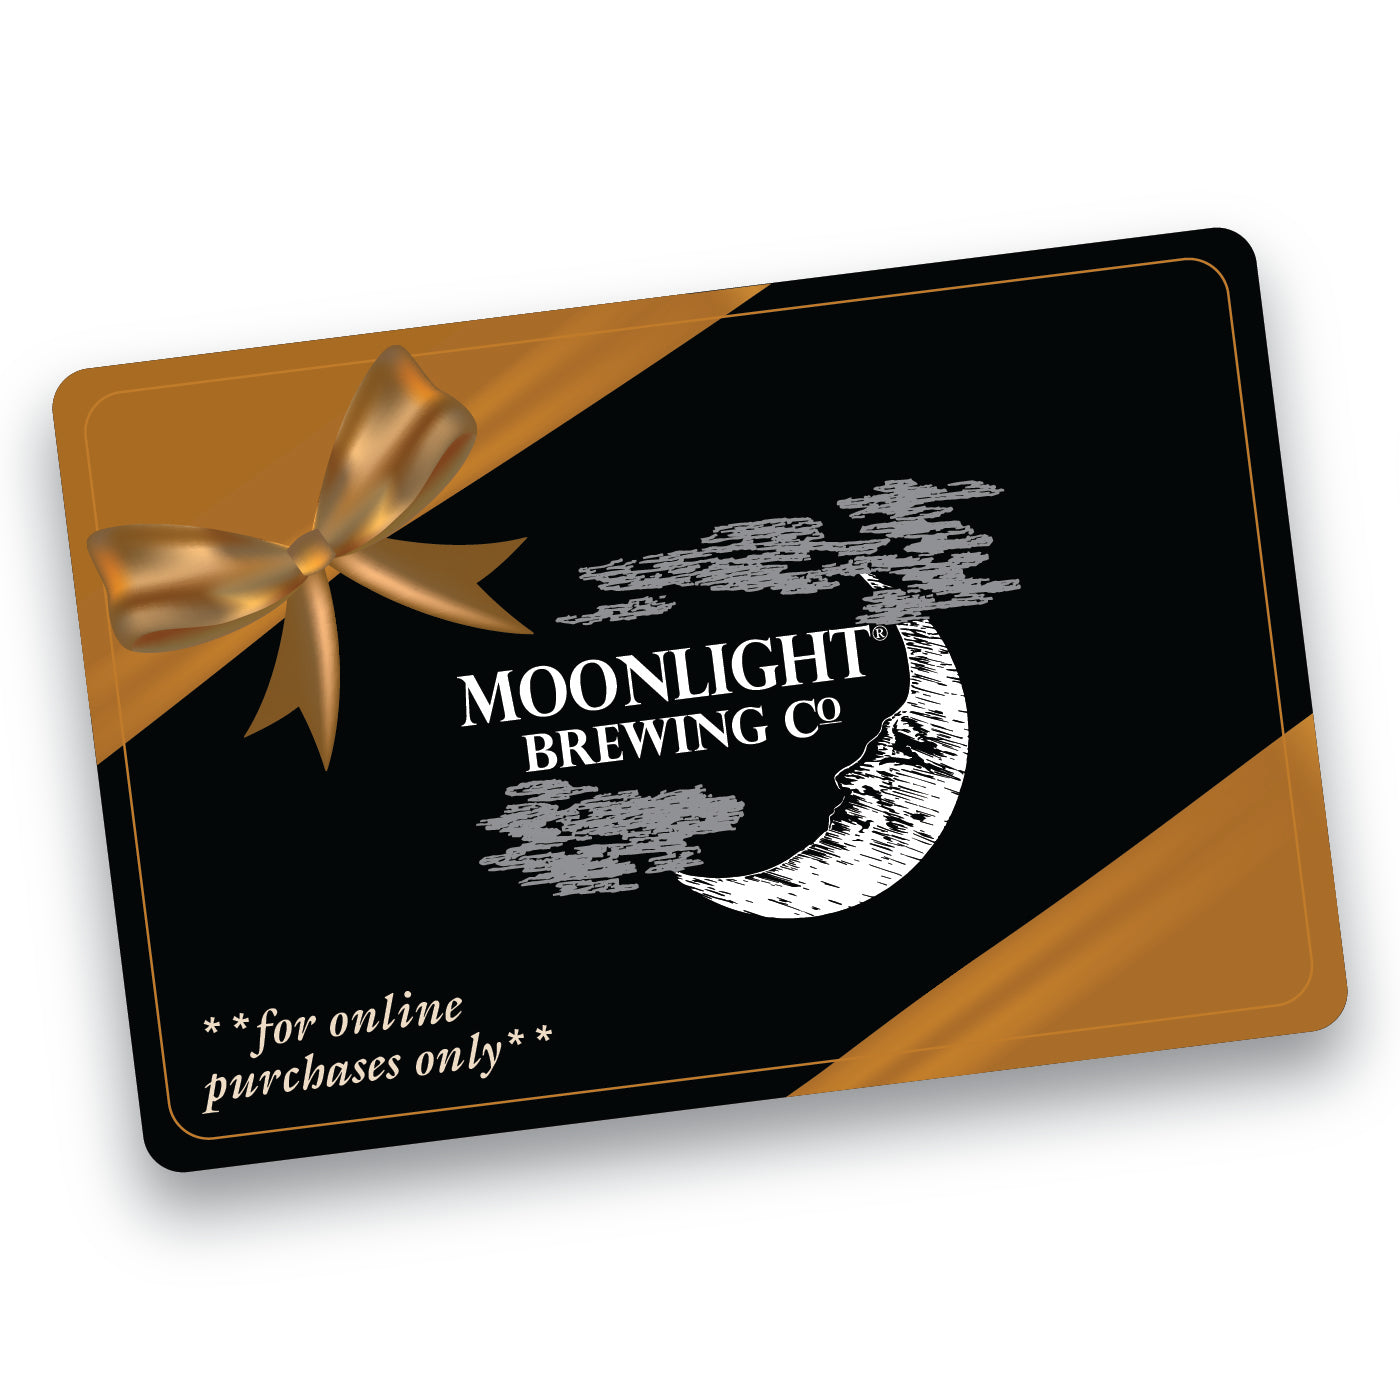 Gift Card – Night Shift Brewing